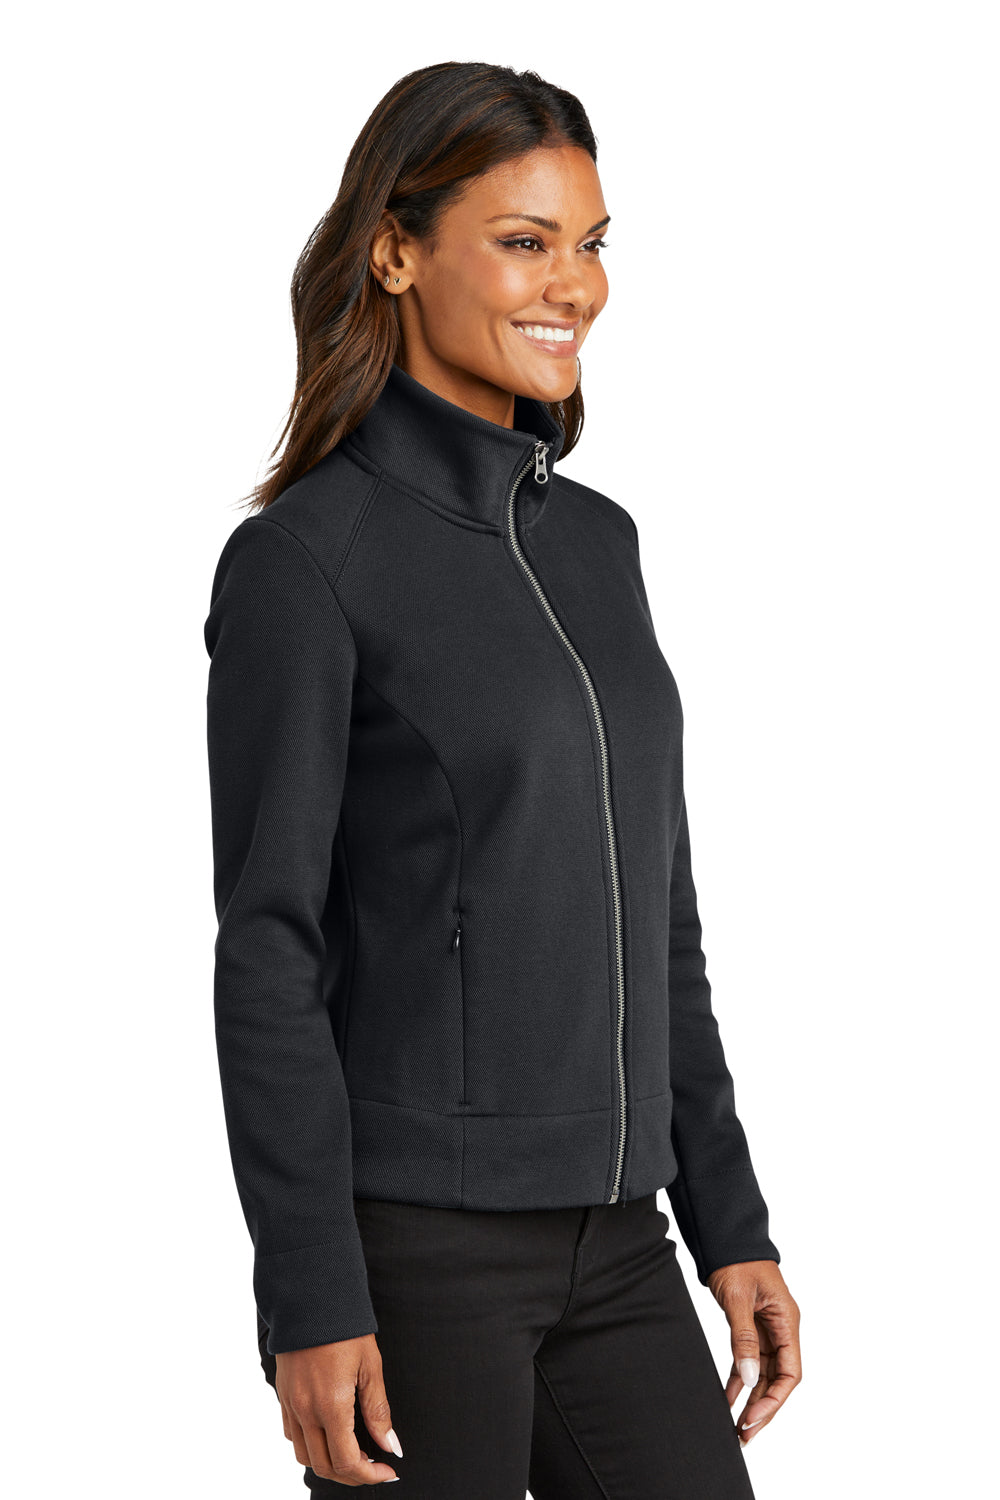 Port Authority L422 Womens Network Fleece Full Zip Jacket Charcoal Grey Side